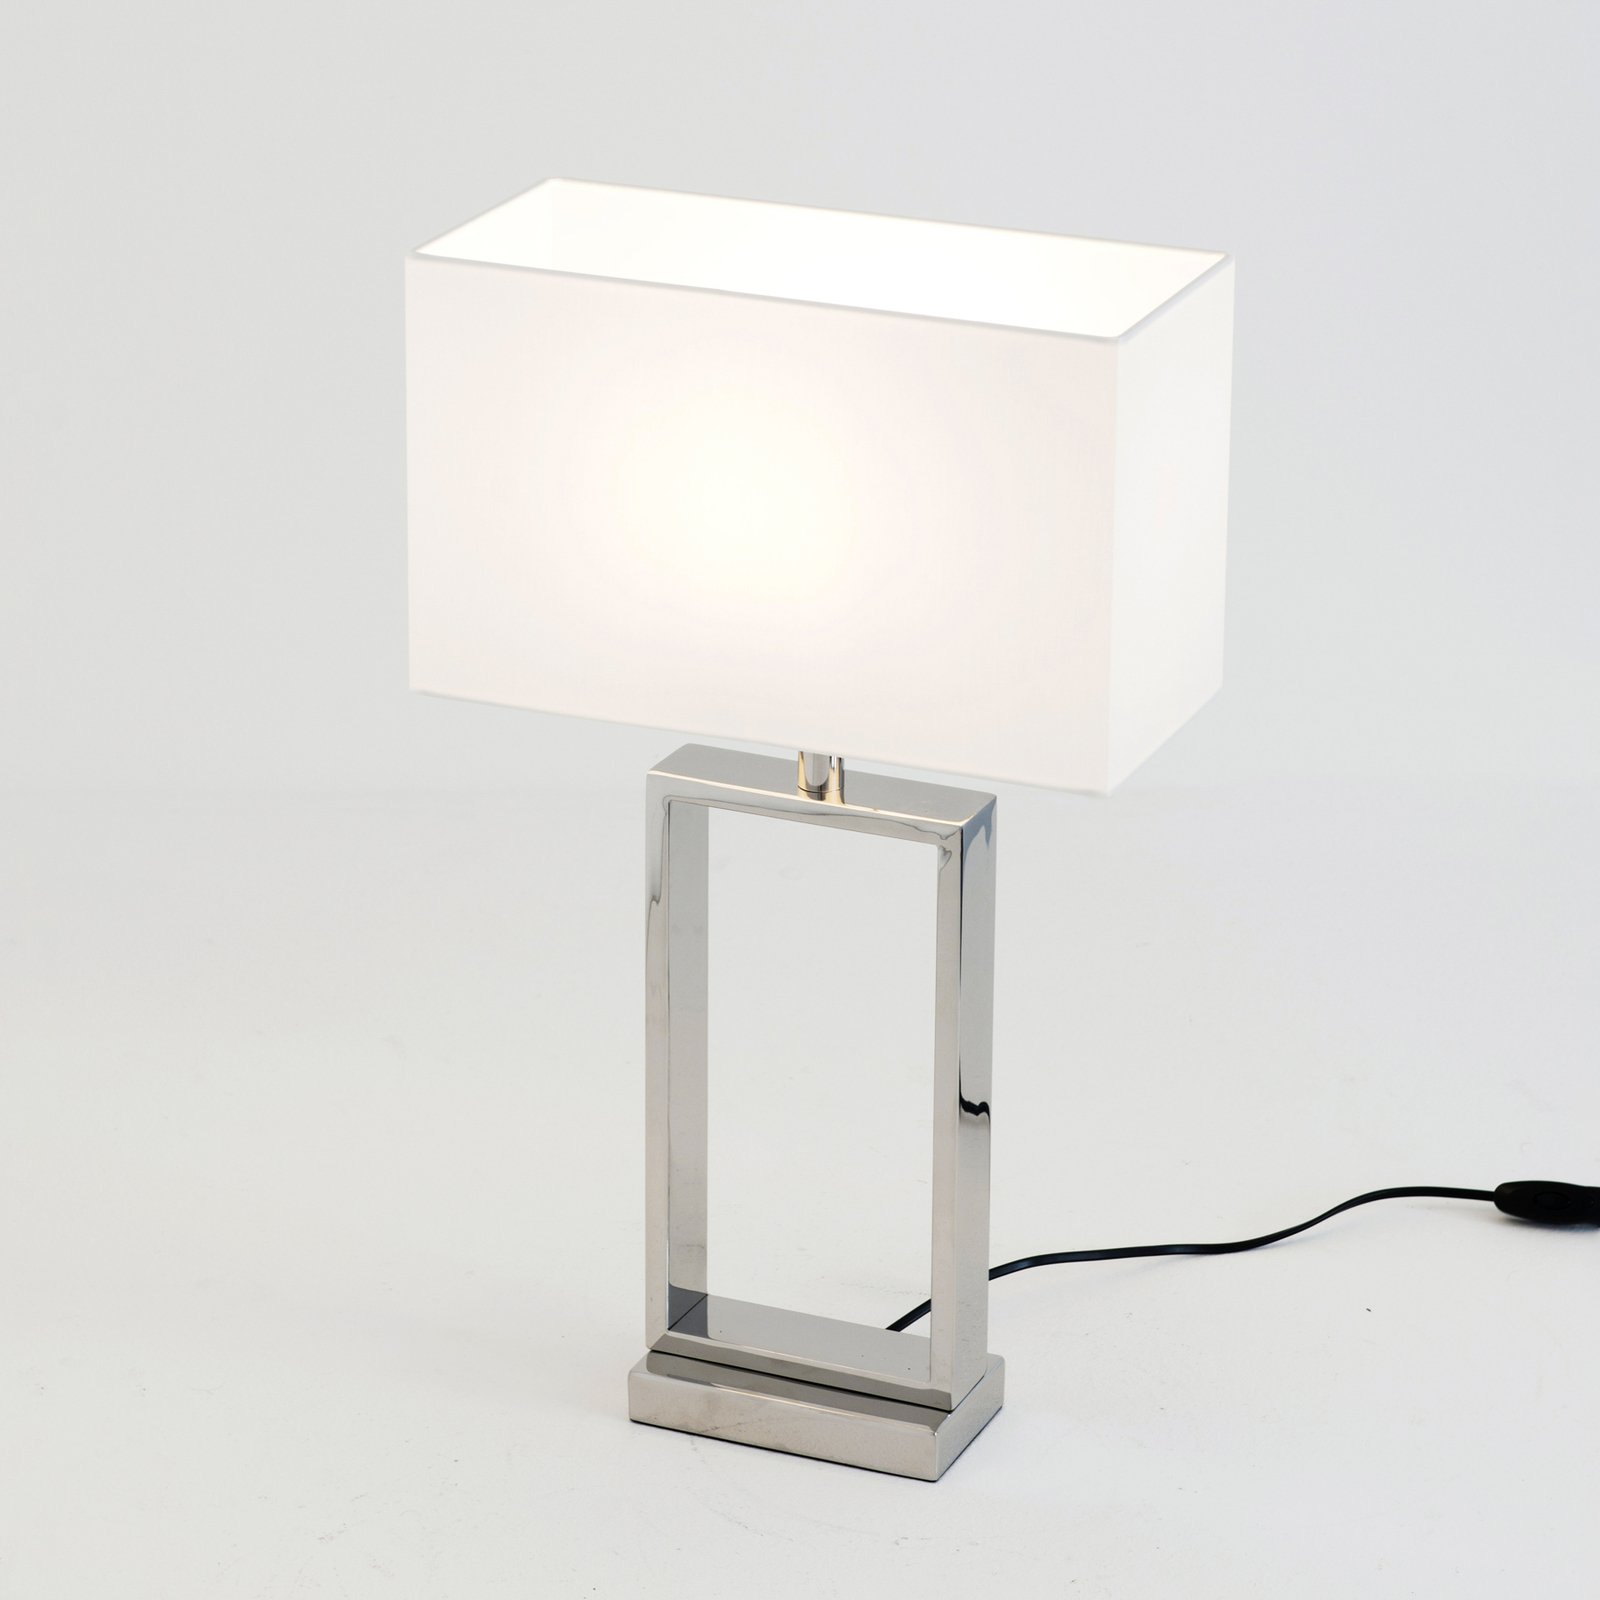 Sprazzo table lamp base silver fabric shade, white